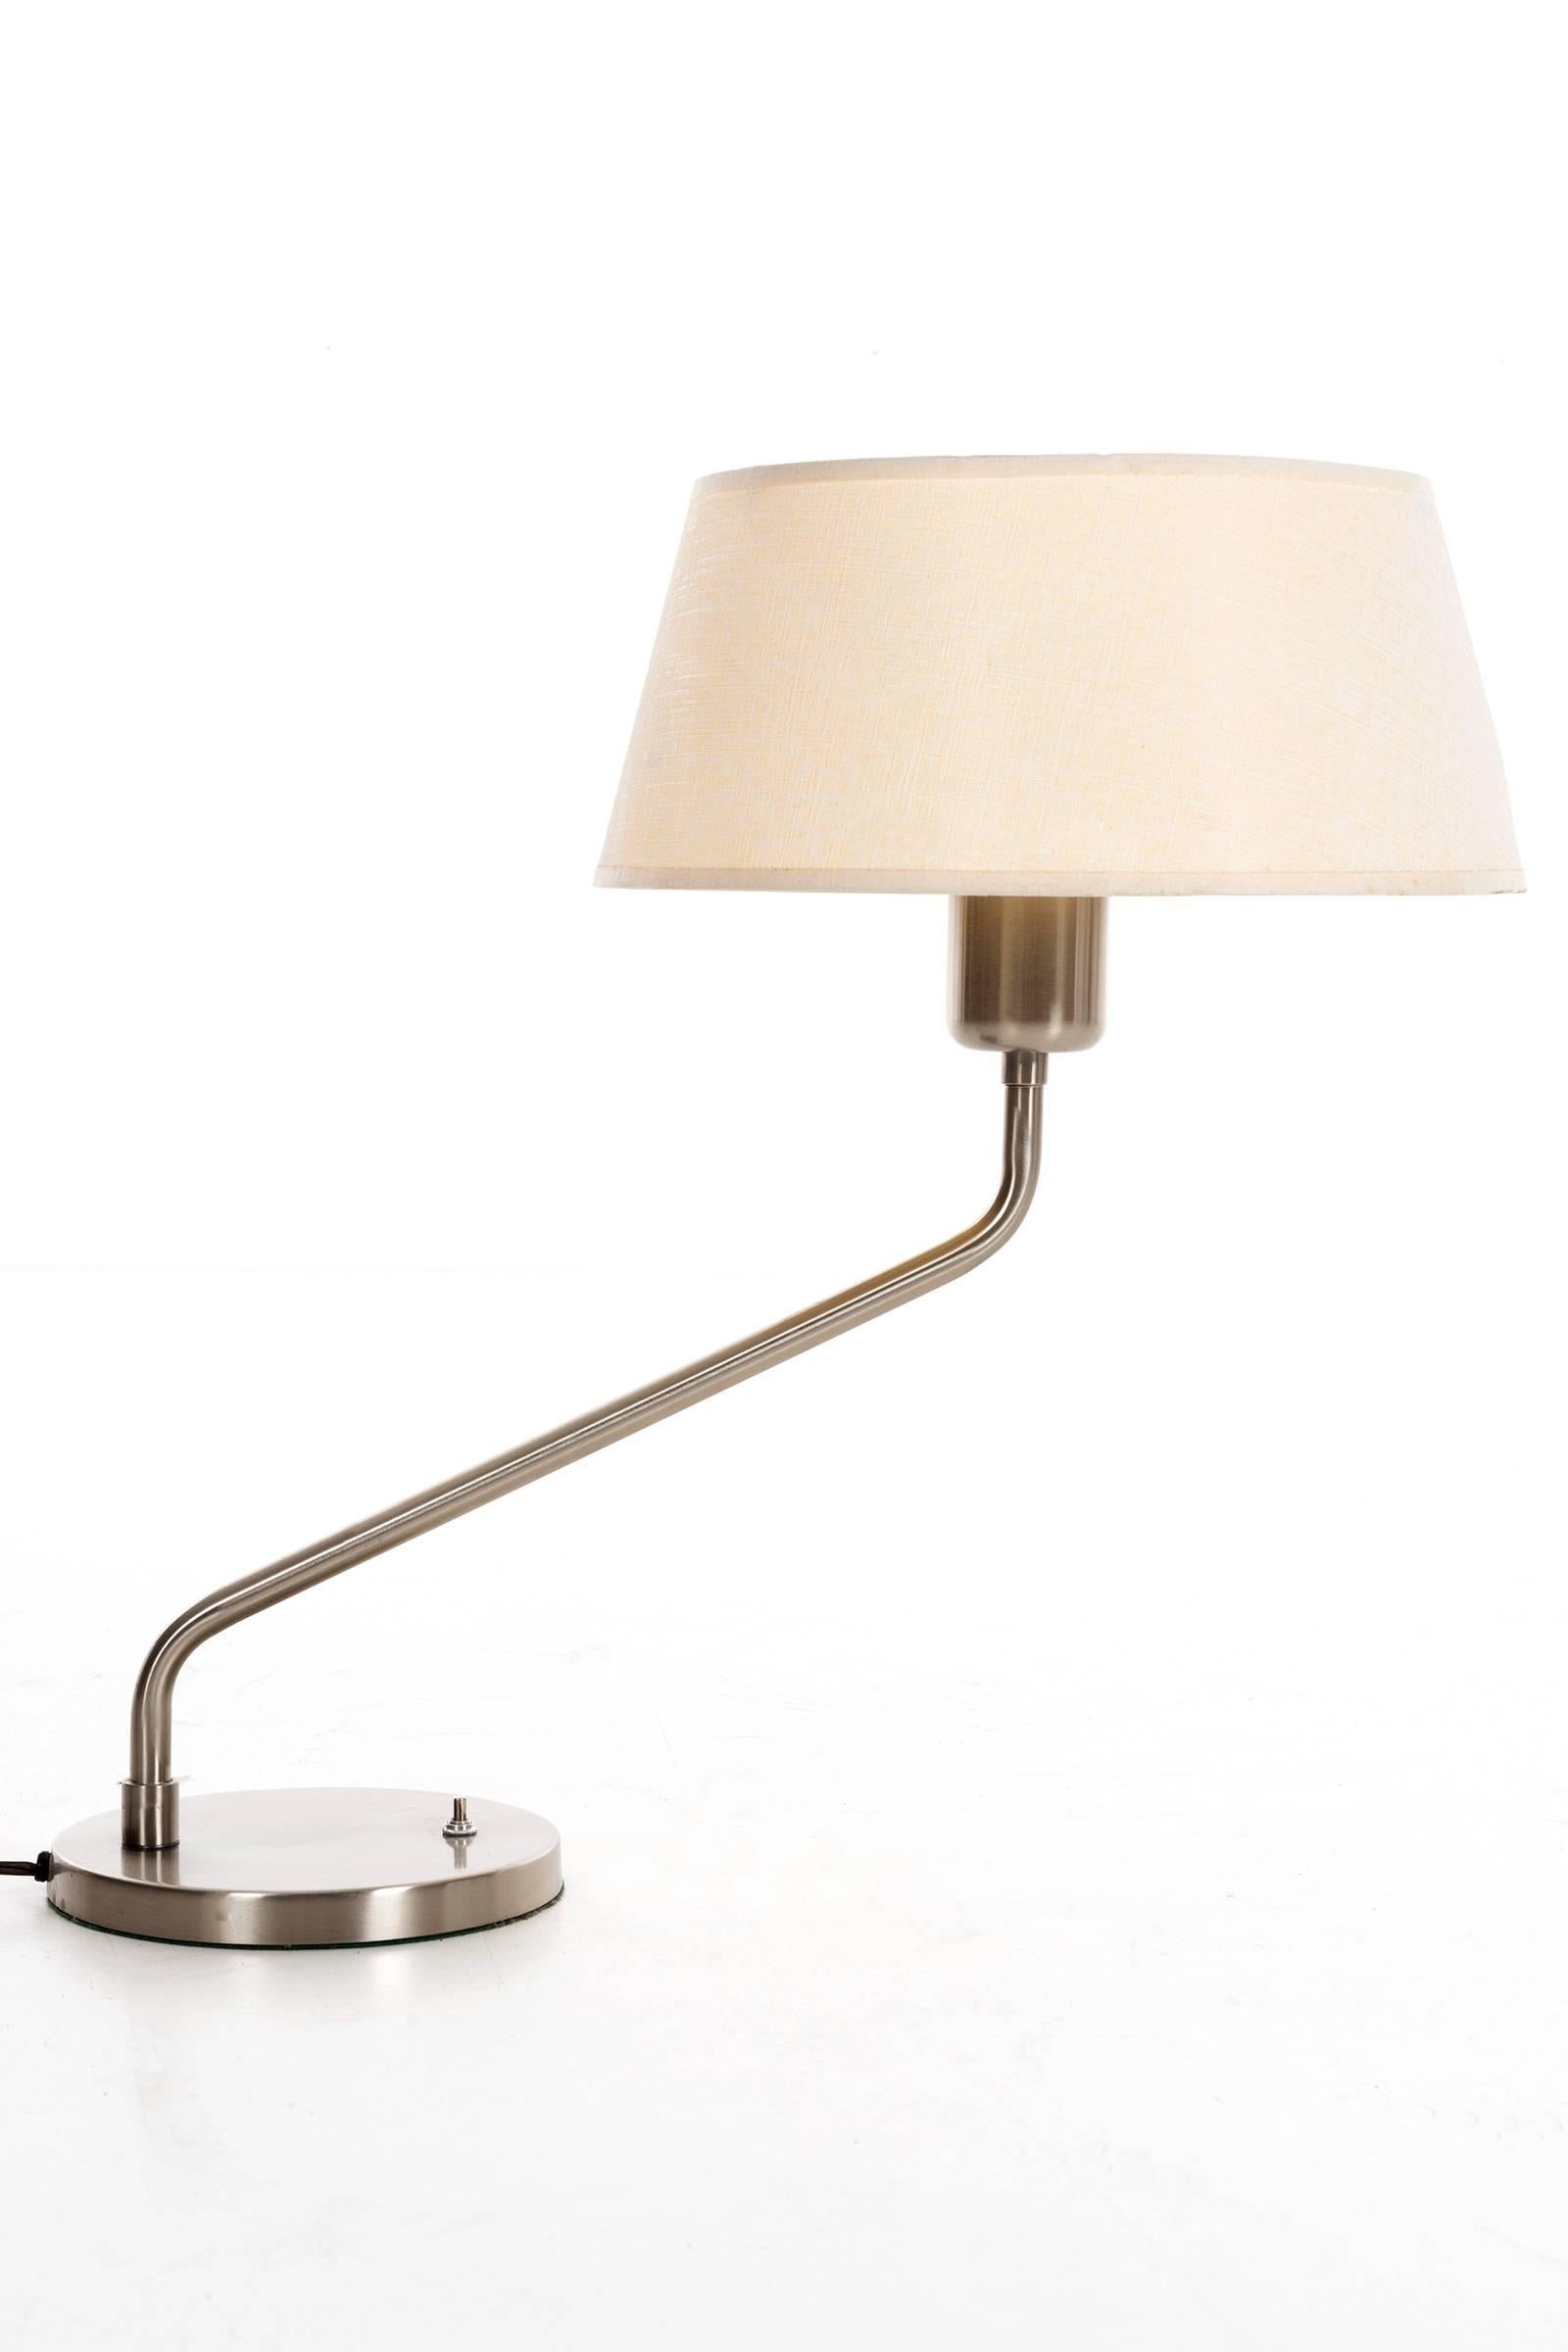 Metal Walter Von Nessen Table Lamp For Sale